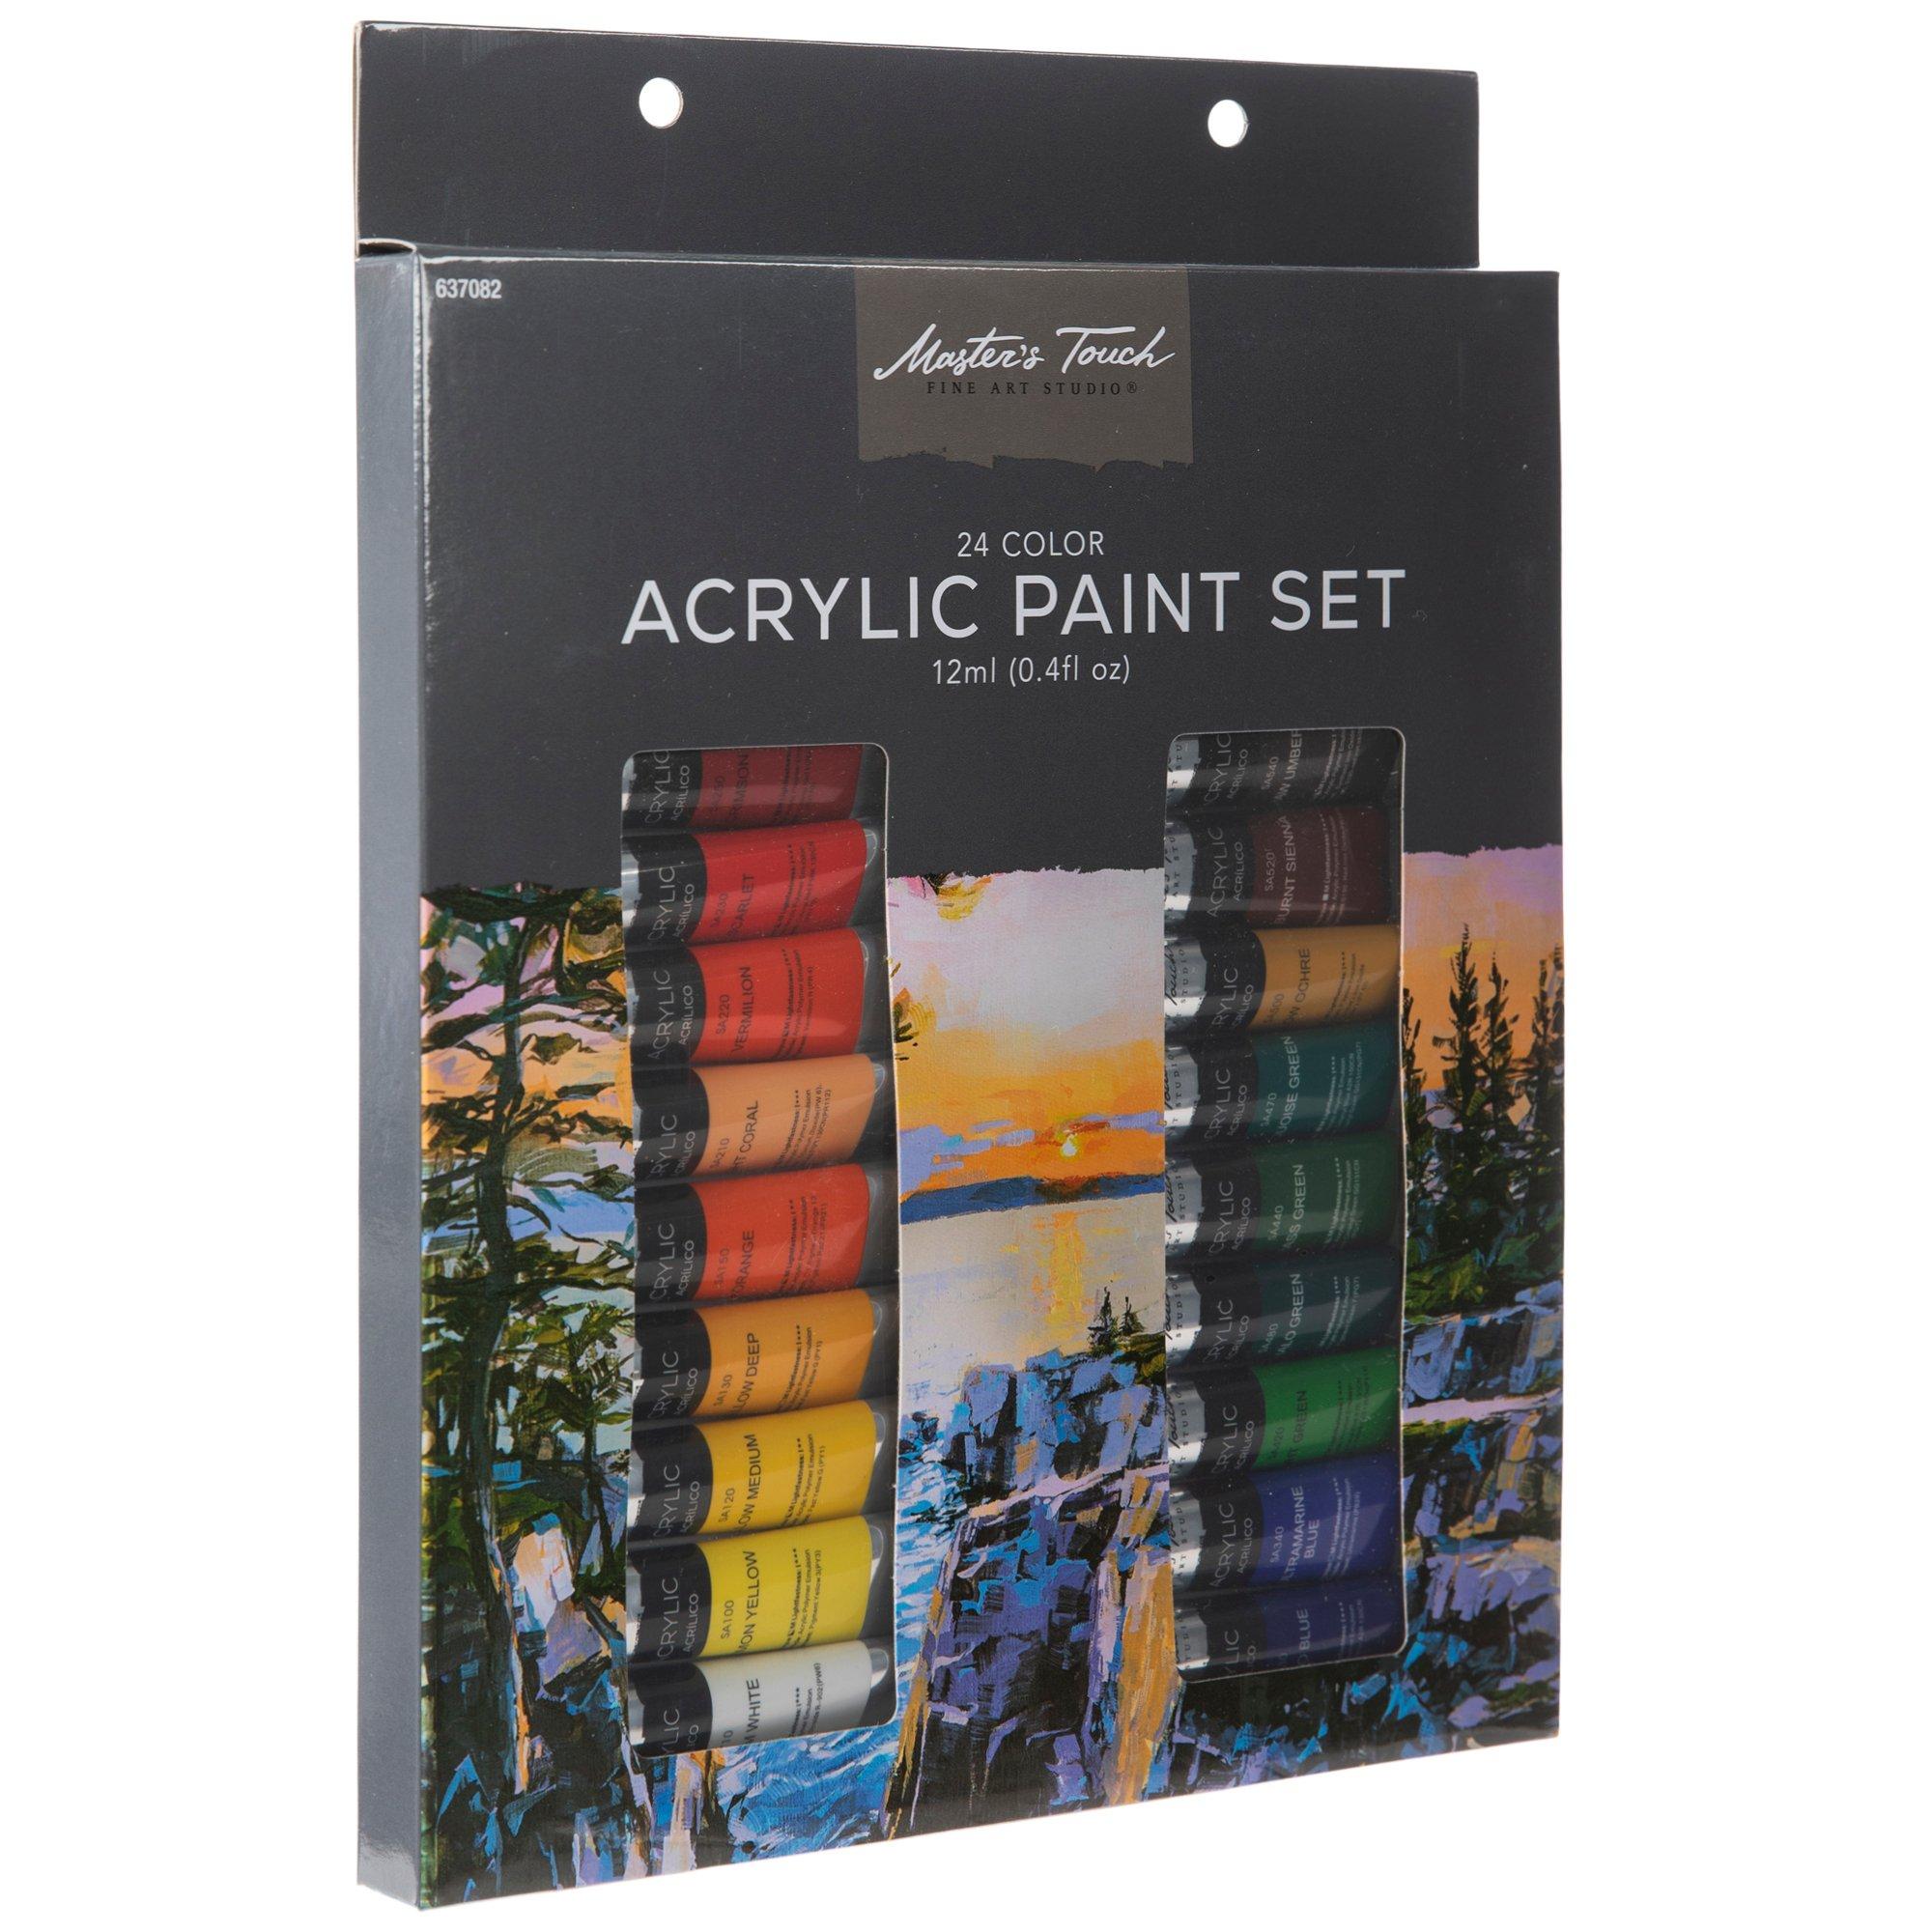 All-Purpose Acrylic Paint - 20 Piece Set, Hobby Lobby